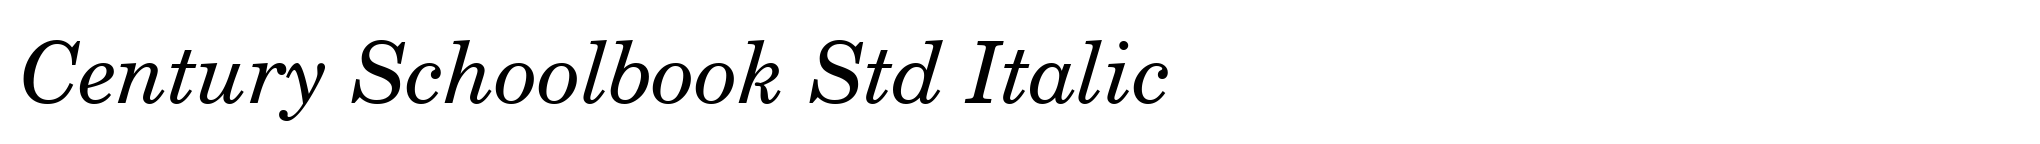 Century Schoolbook Std Italic image